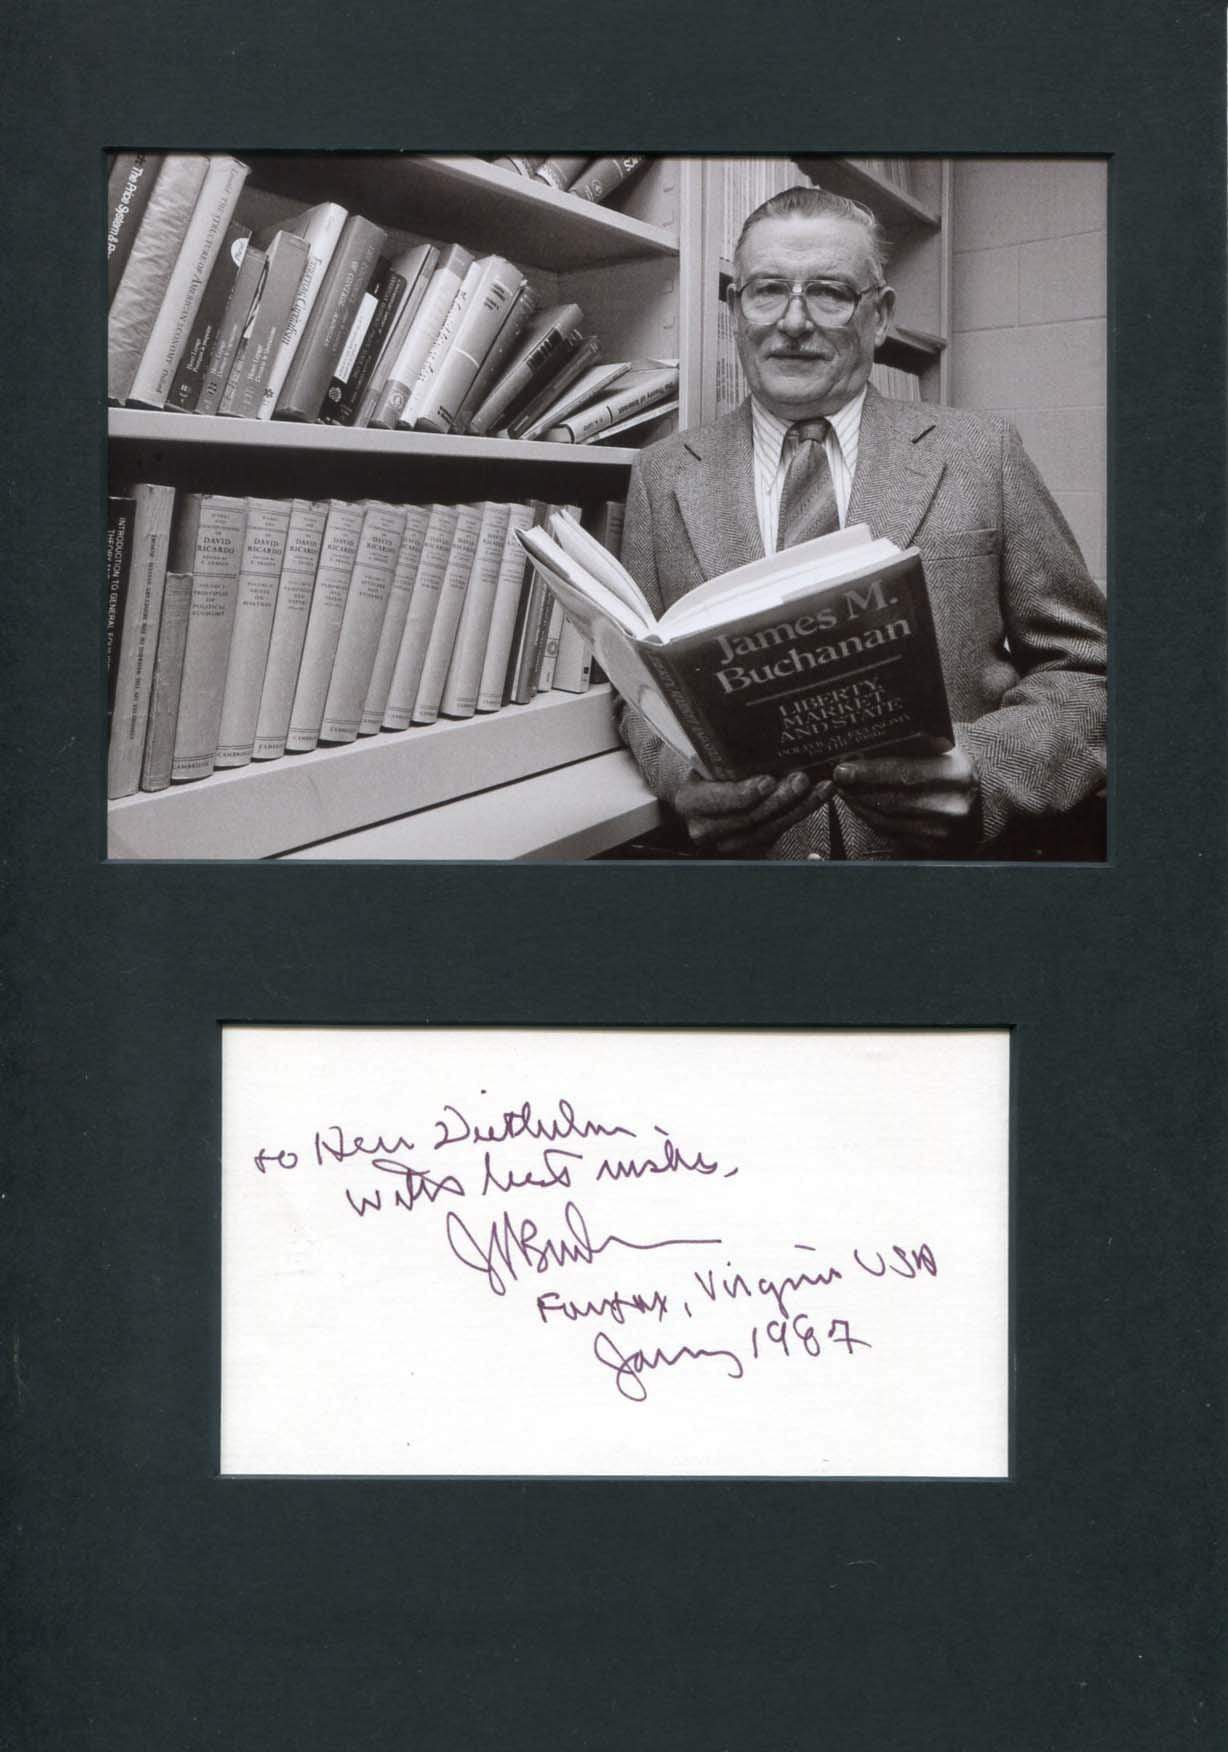 Buchanan, James M. autograph